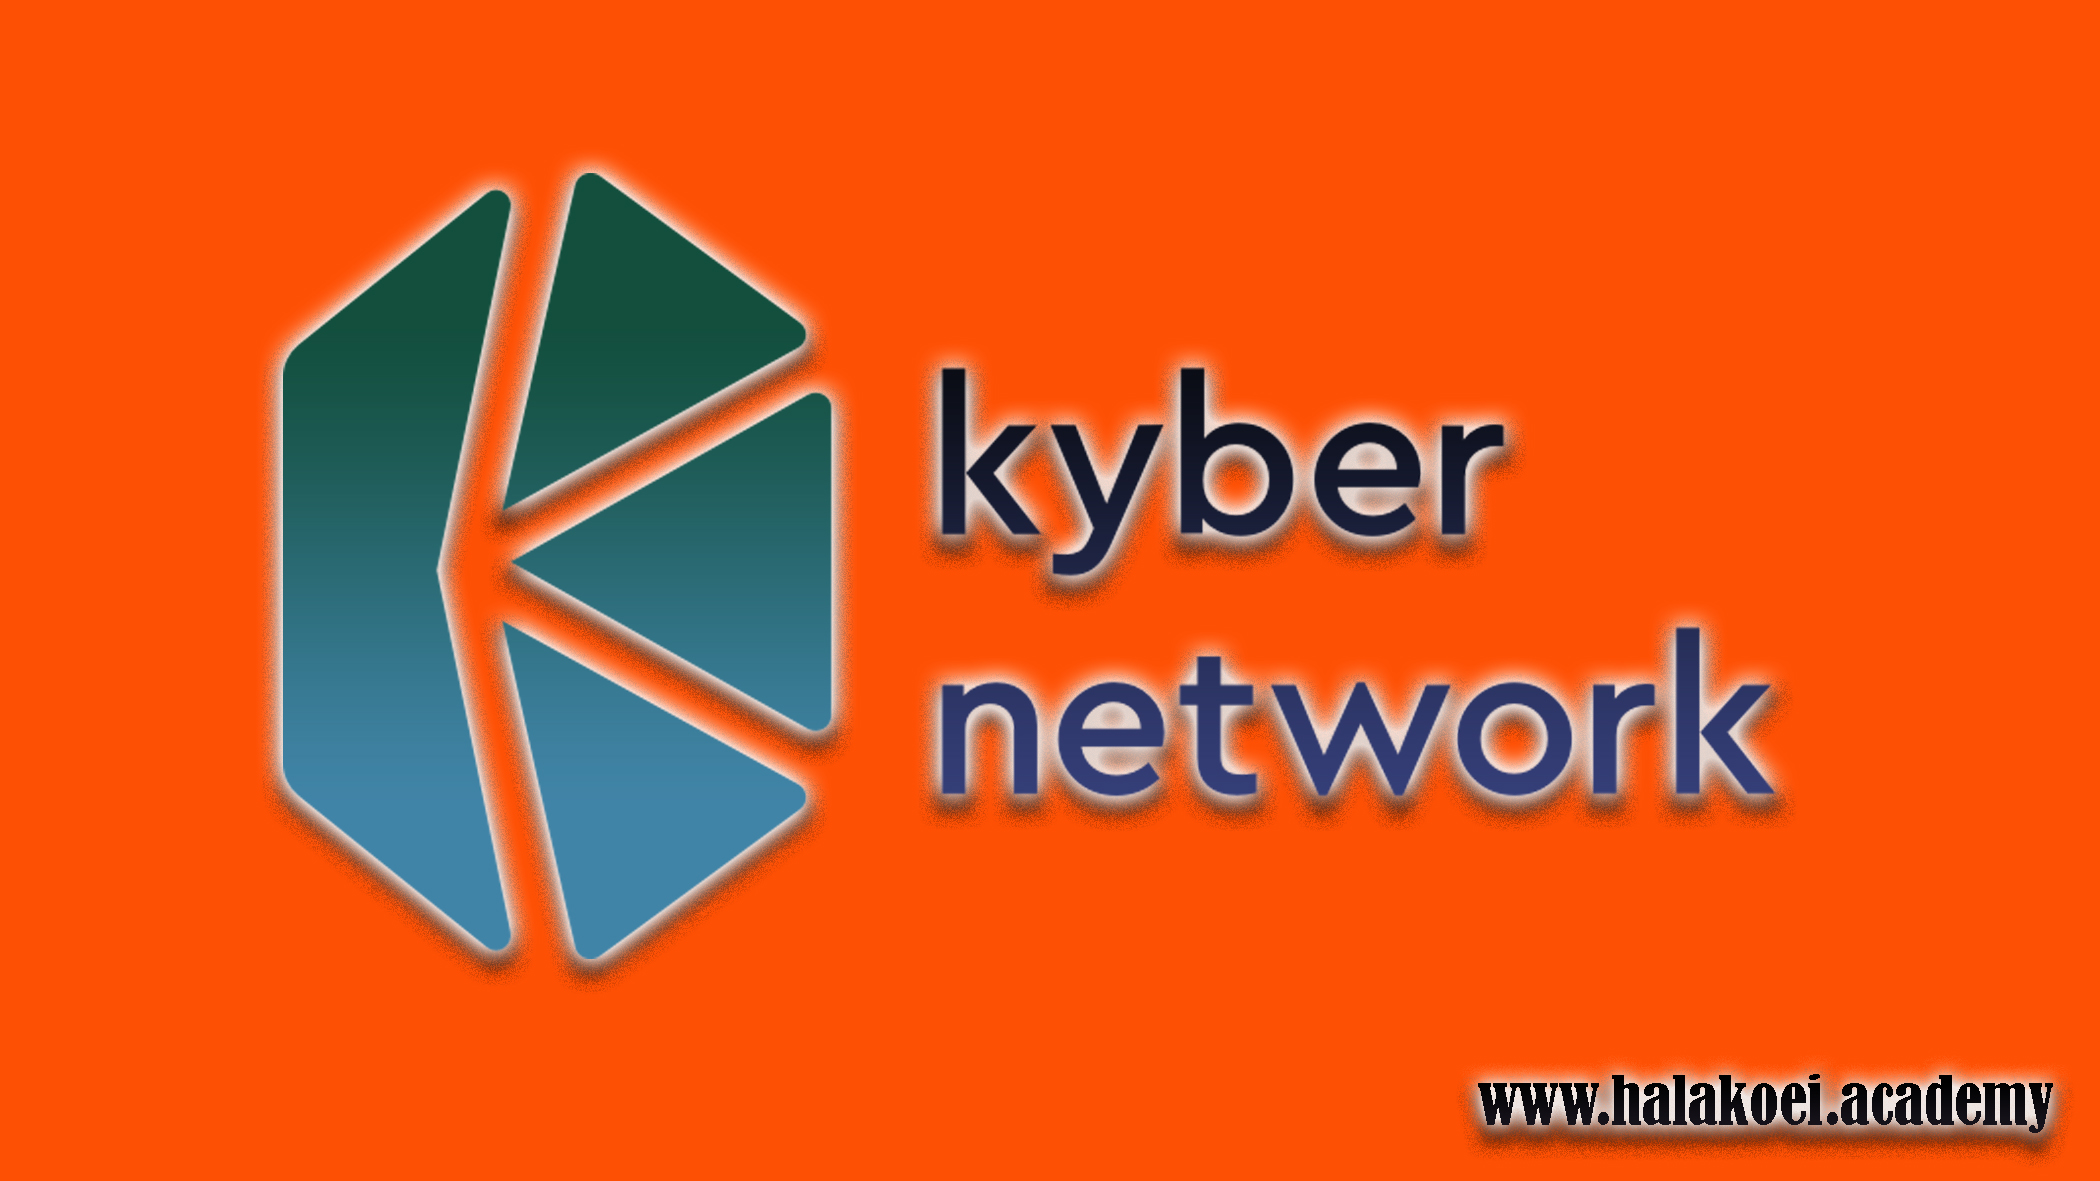 Kyber network